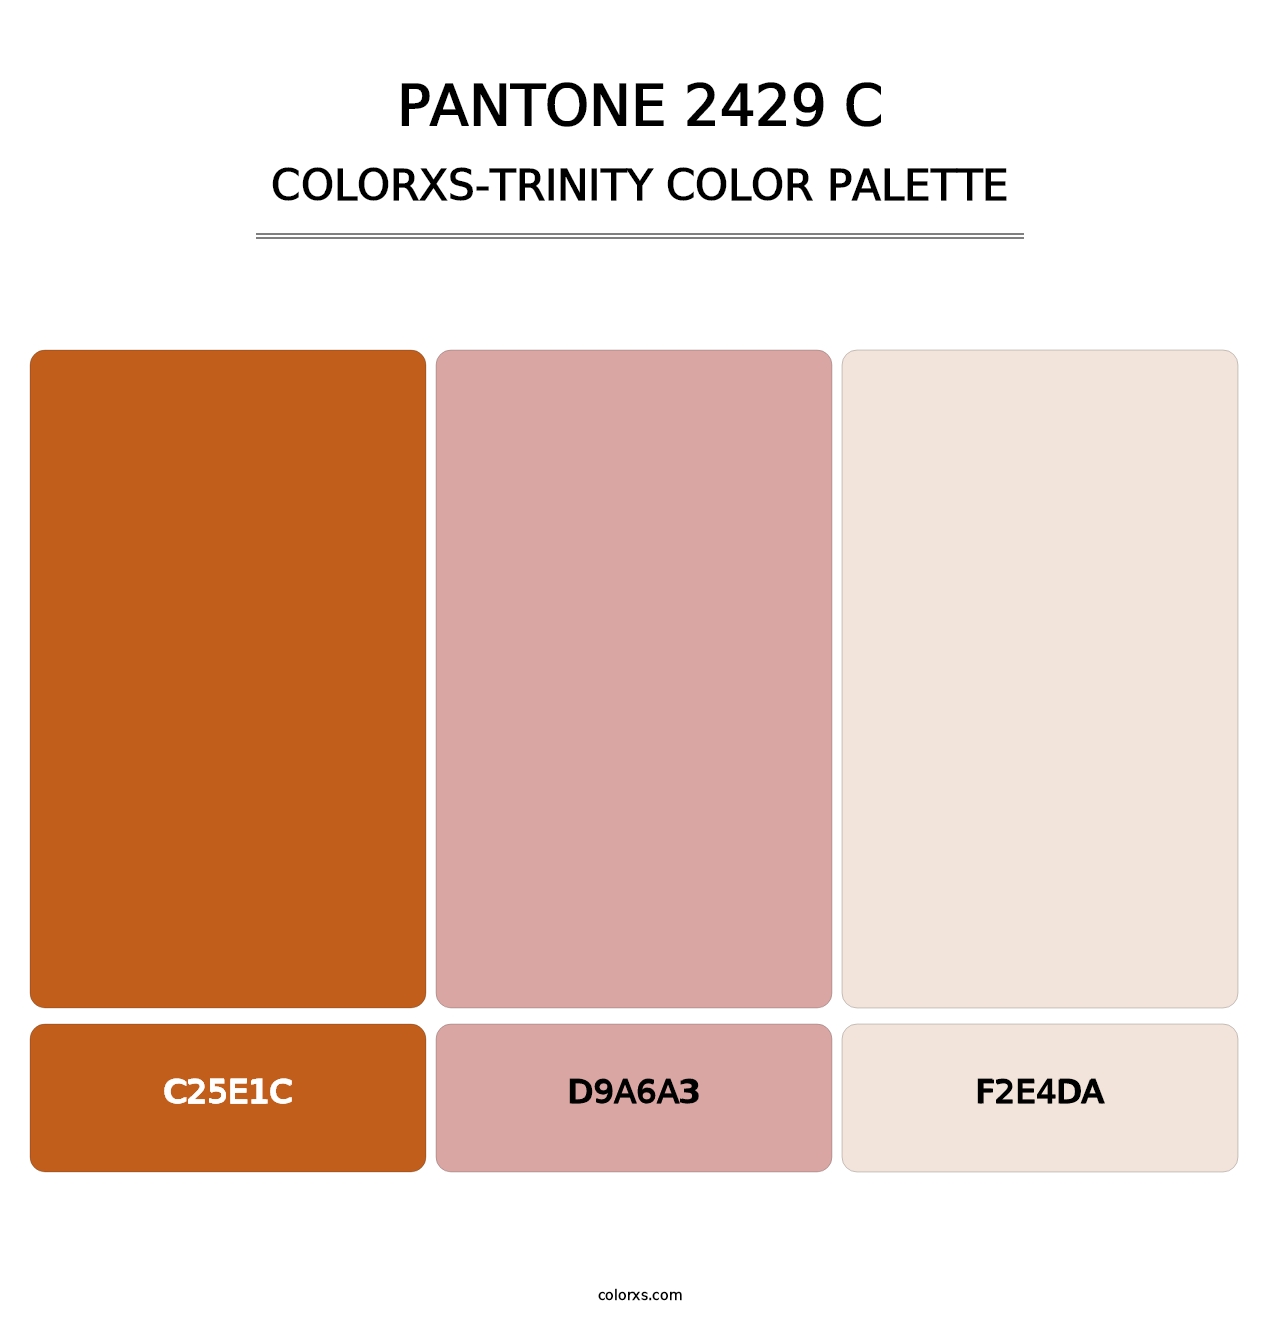 PANTONE 2429 C - Colorxs Trinity Palette